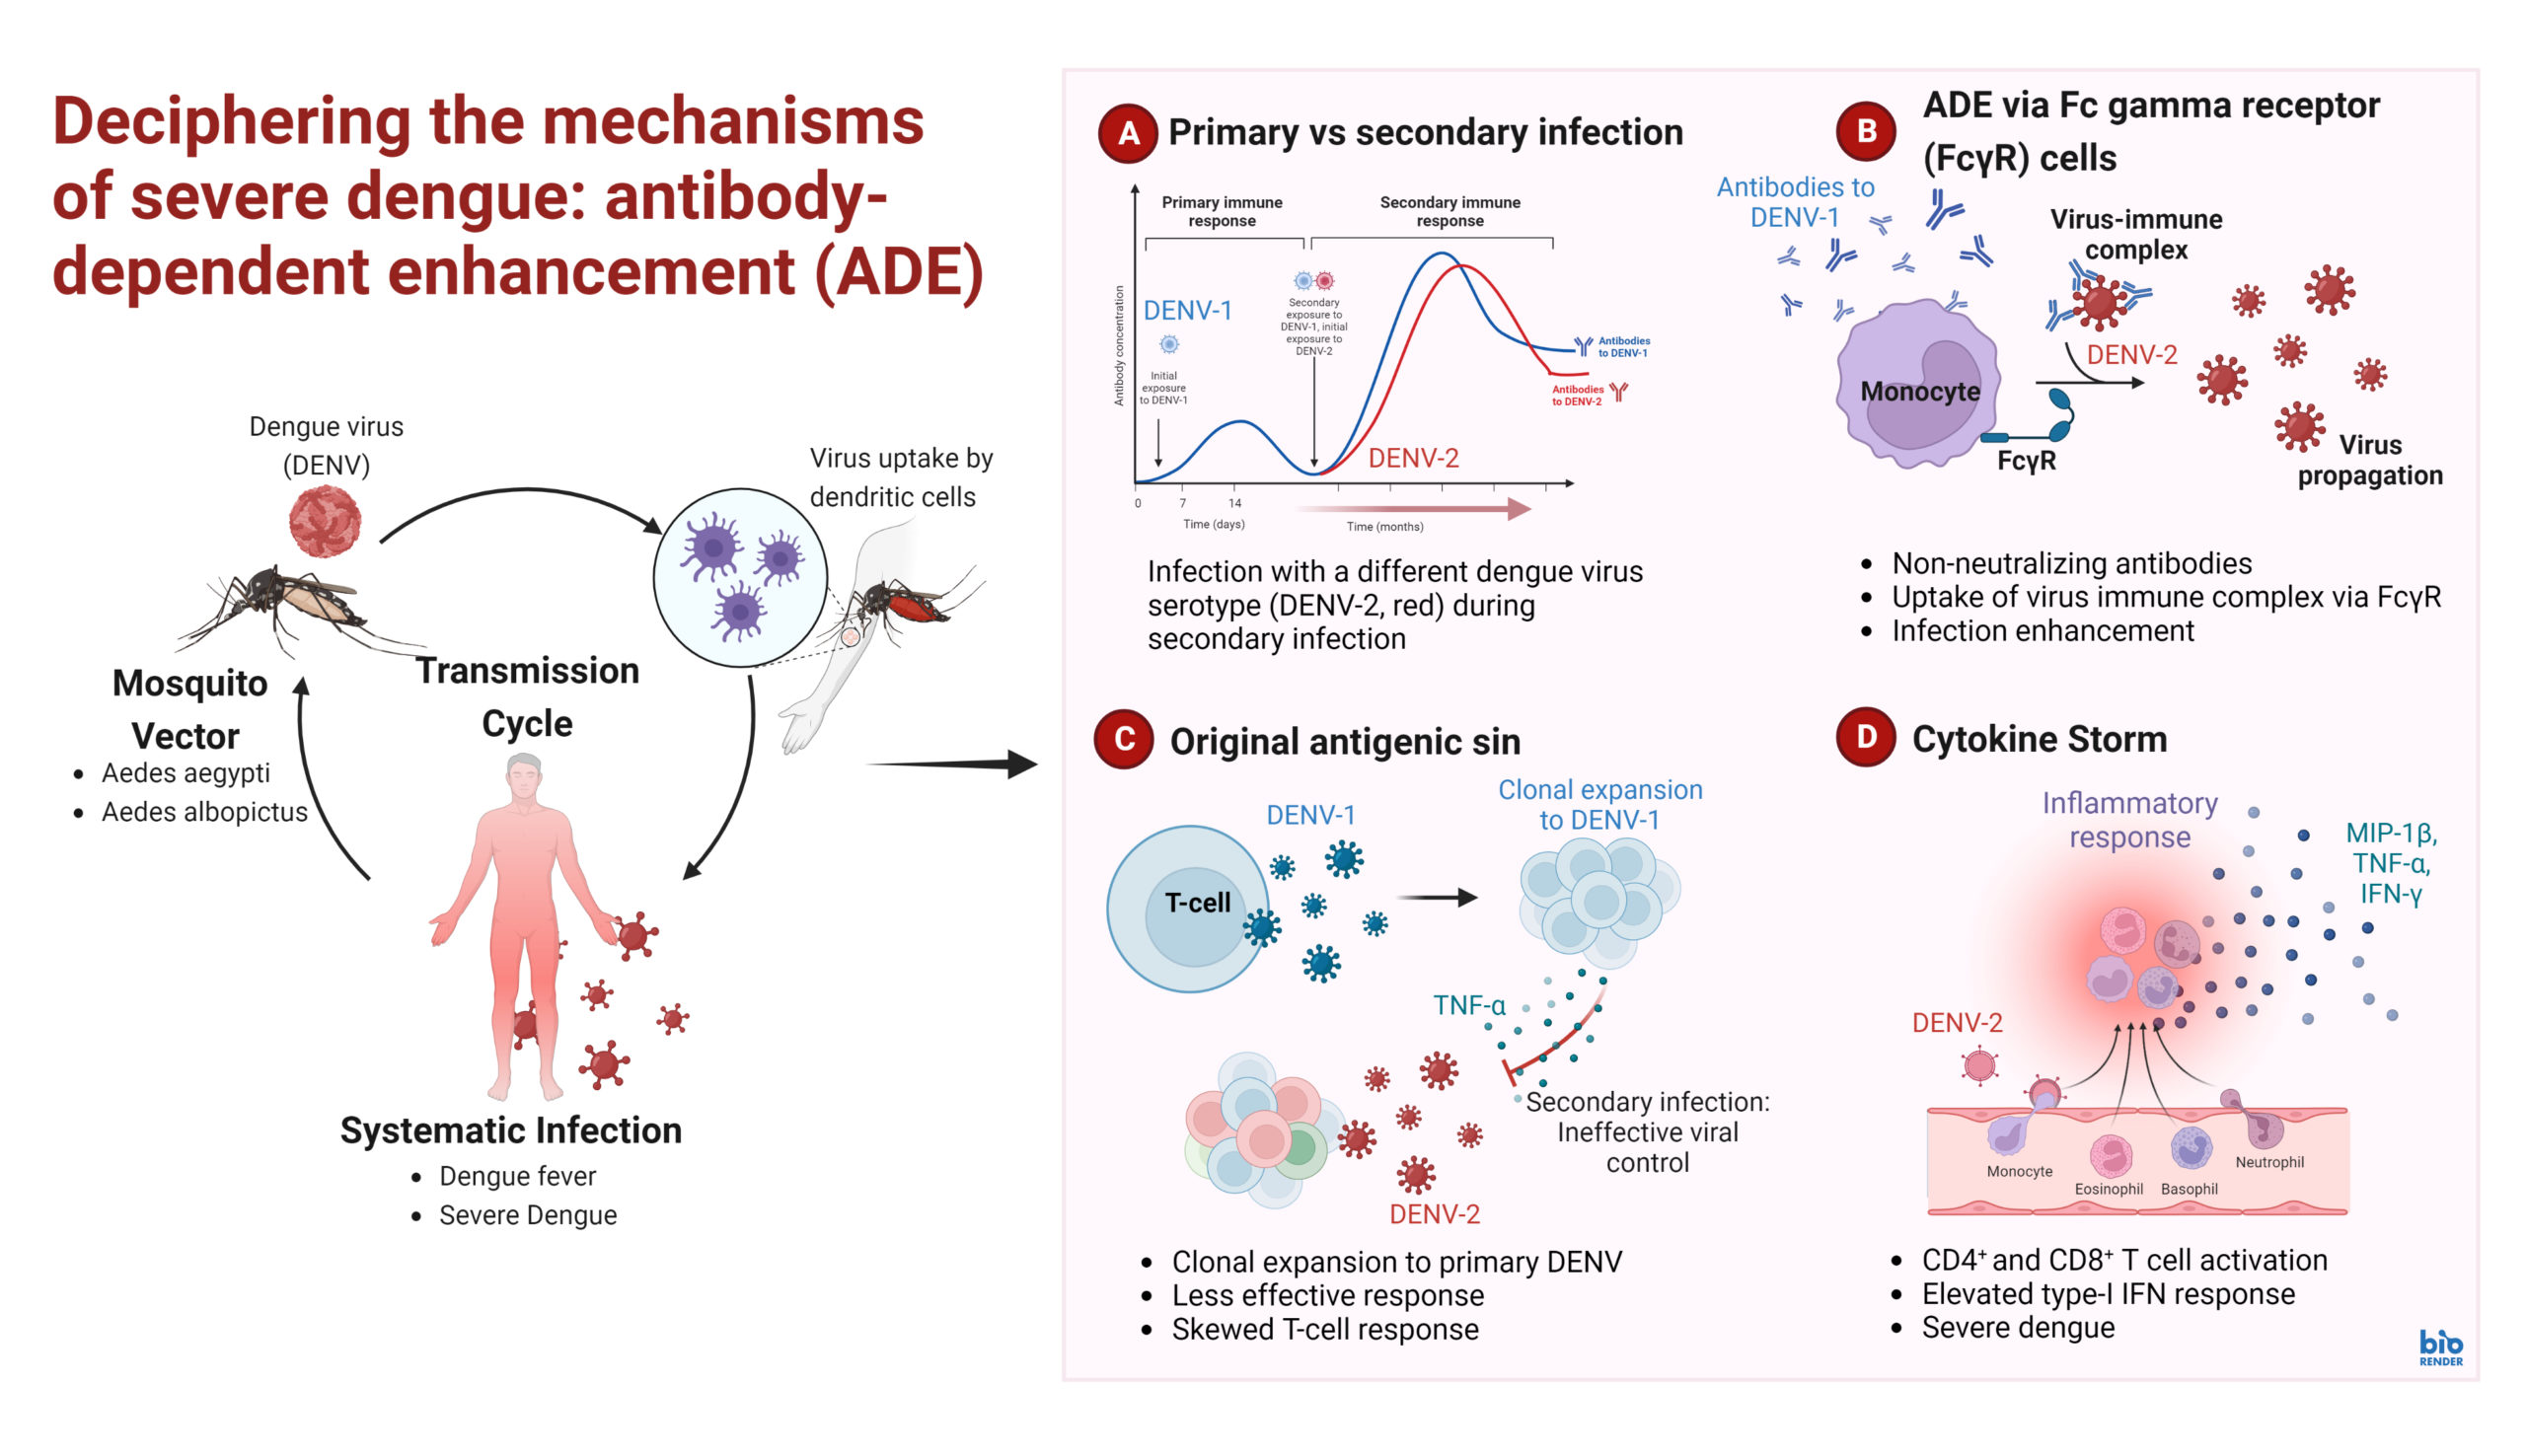 deciphering the mechanisms of serve dengue: antibody-dependant enhancement (ADE)